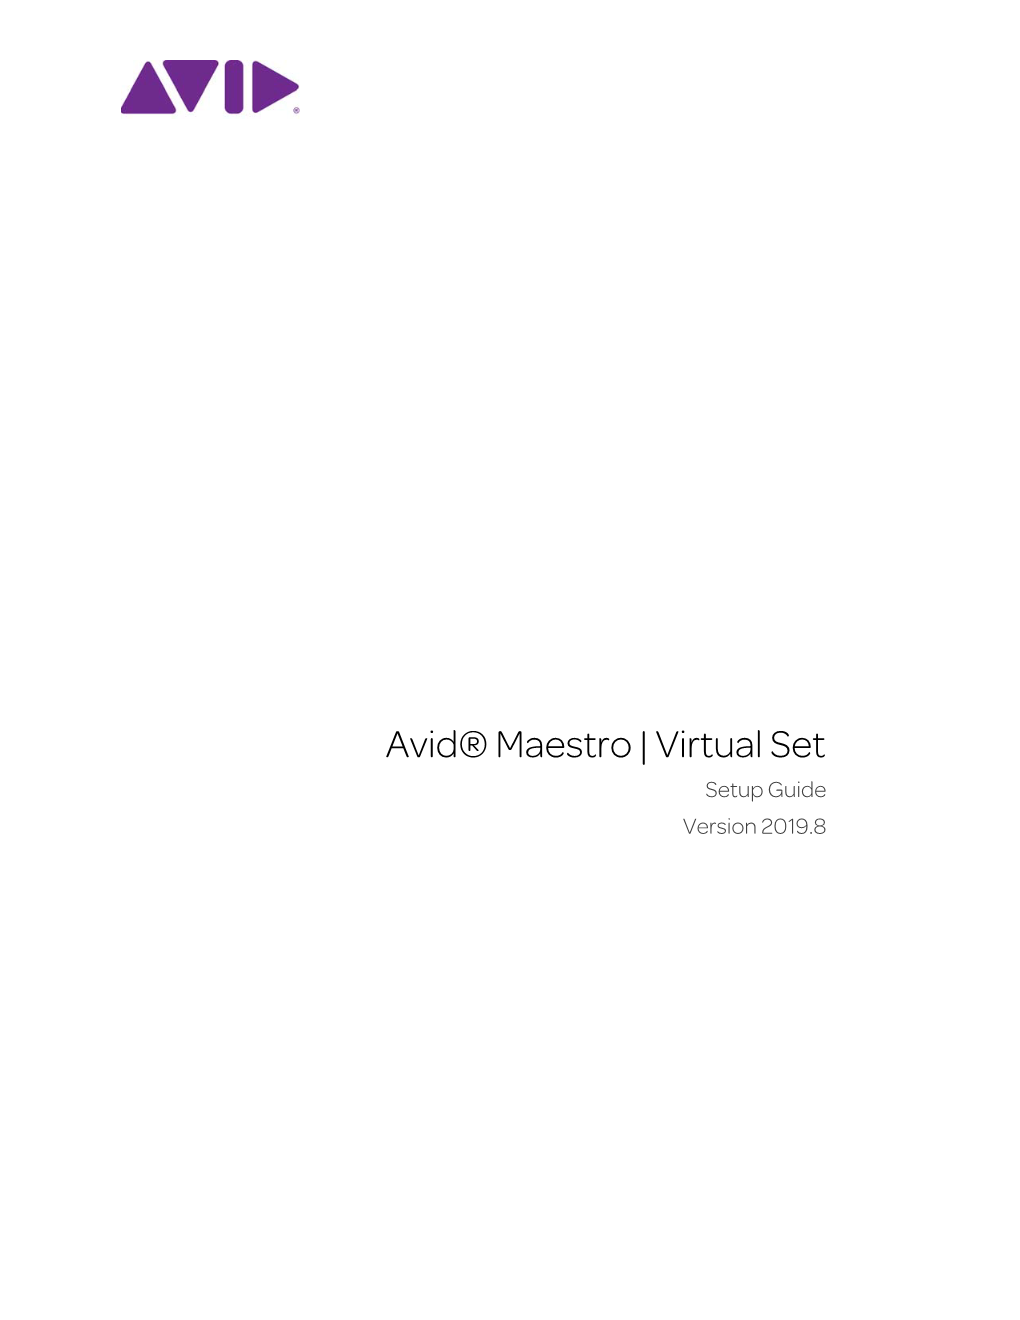 Avid Maestro | Virtual Set Setup Guide V2019.8